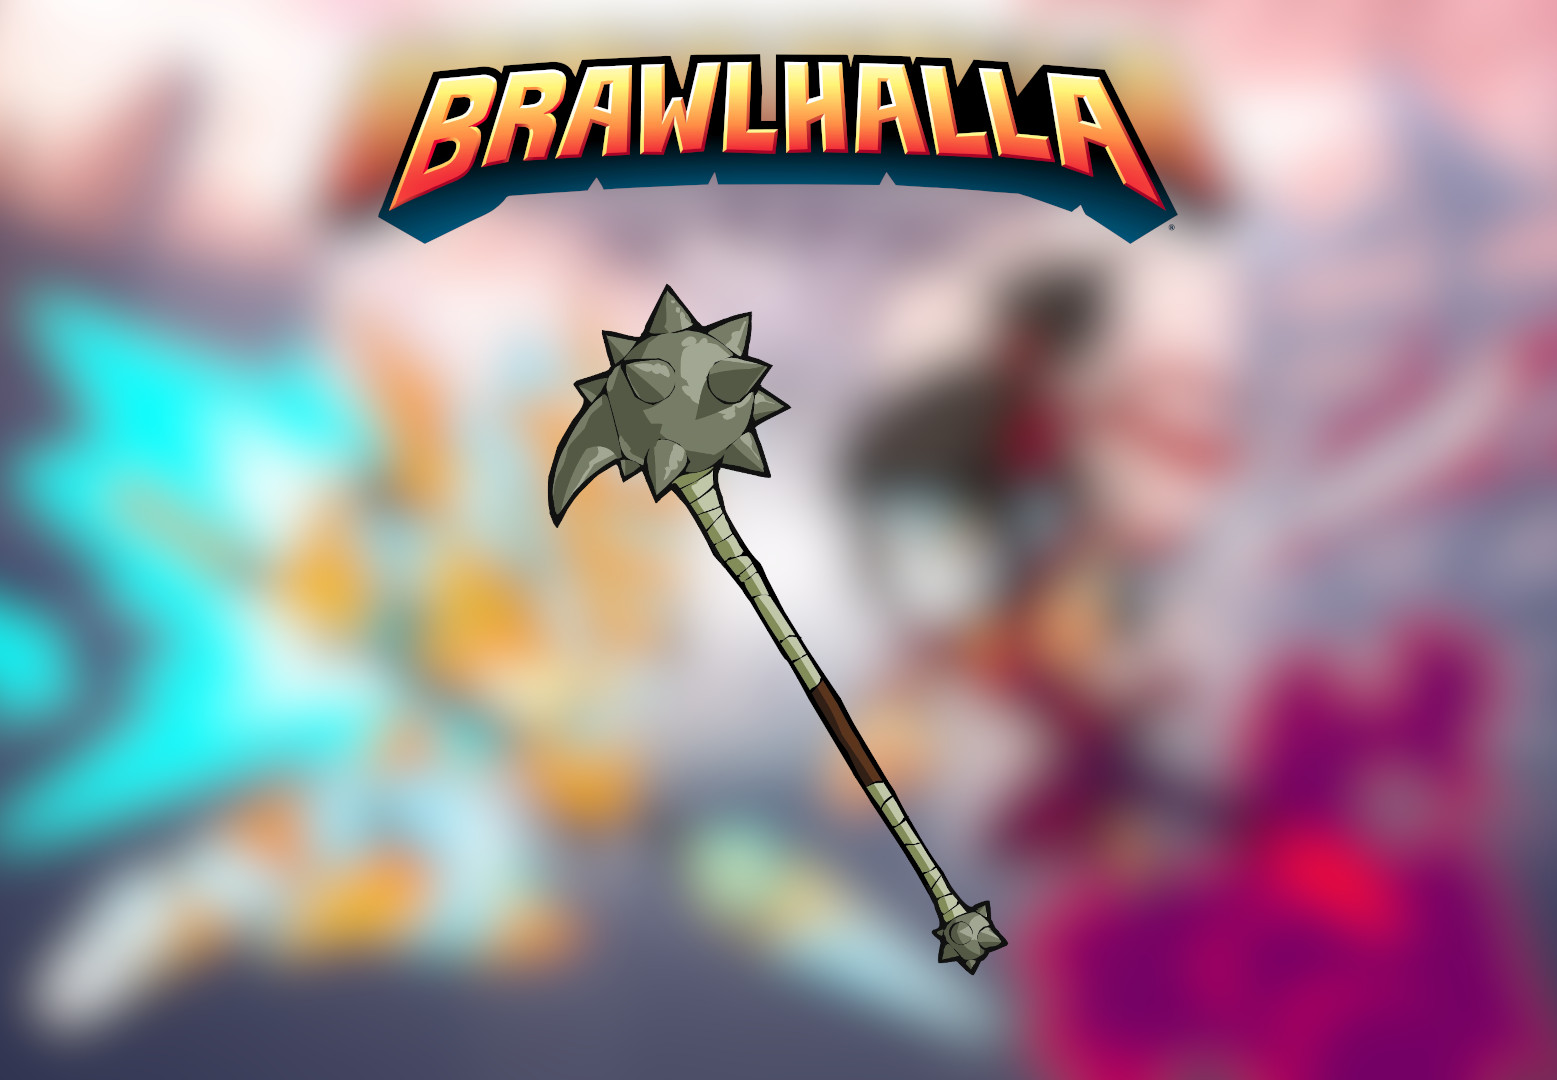 [$ 0.56] Brawlhalla - Morning Maul Weapon Skin DLC CD Key